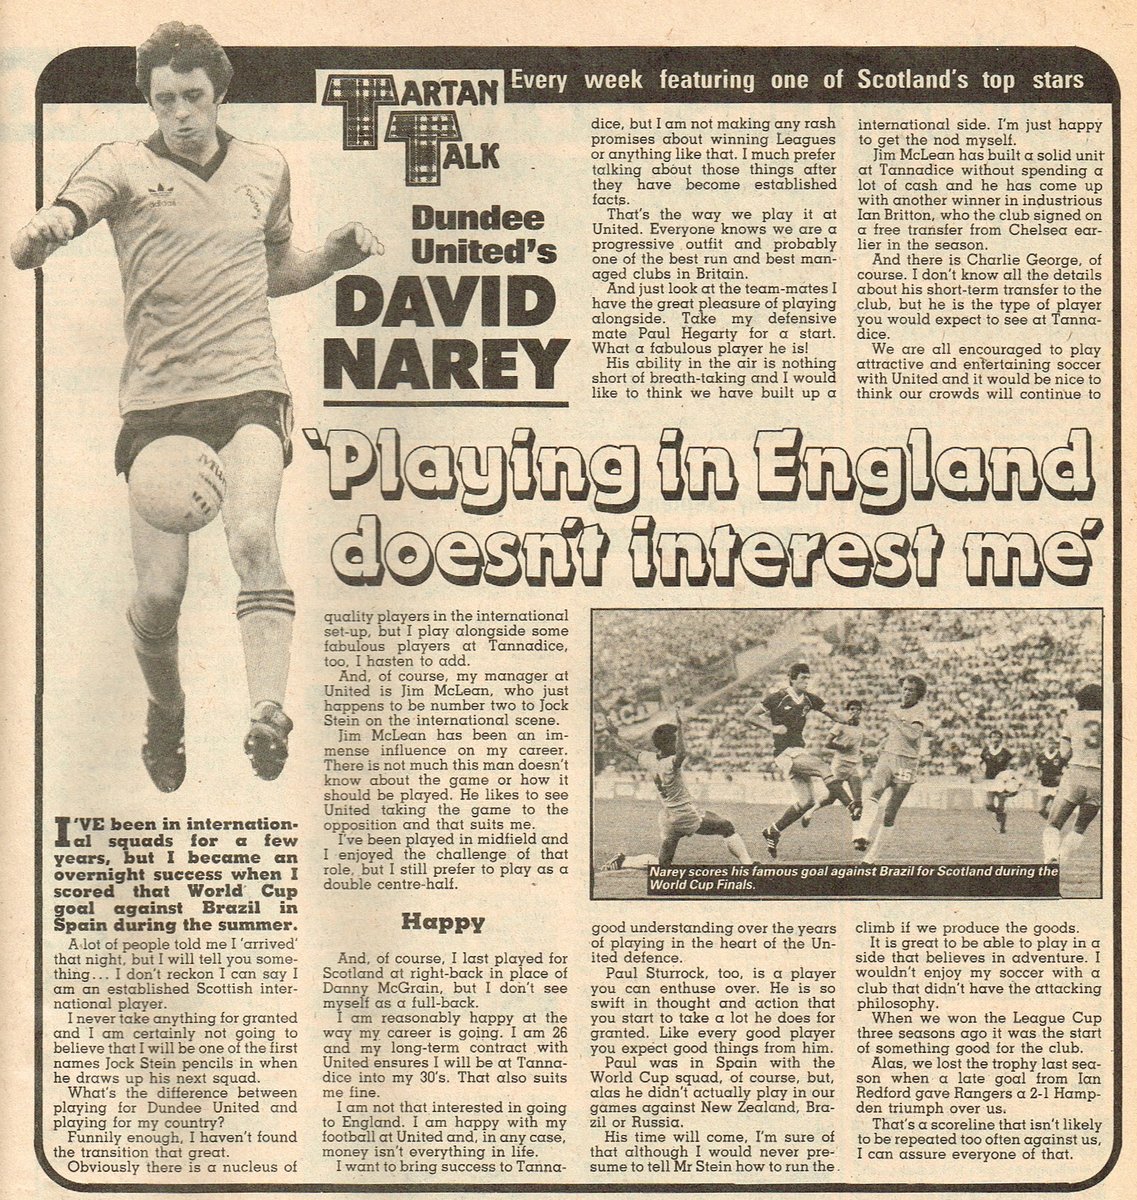 'Playing in England doesn't interest me' #TartanTalk #DavidNarey #DundeeUtd #Shoot! 1982-10-09